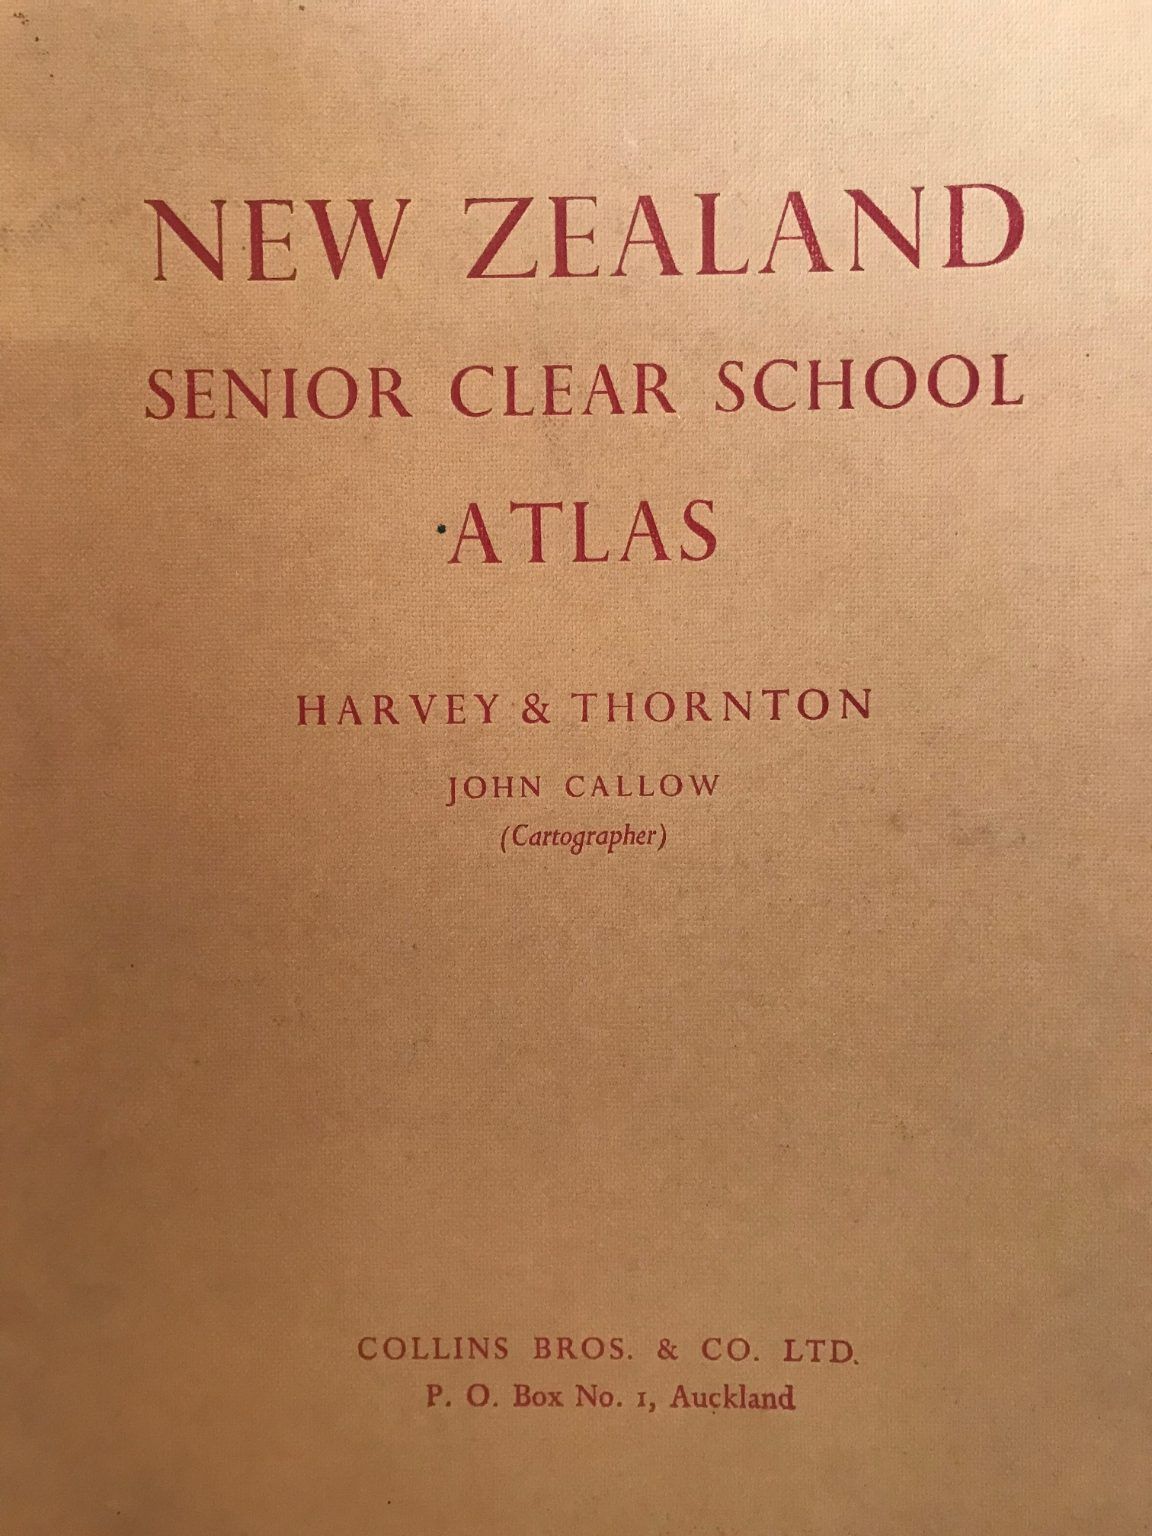 NEW ZEALAND SENIOR CLEAR SCHOOL ATLAS